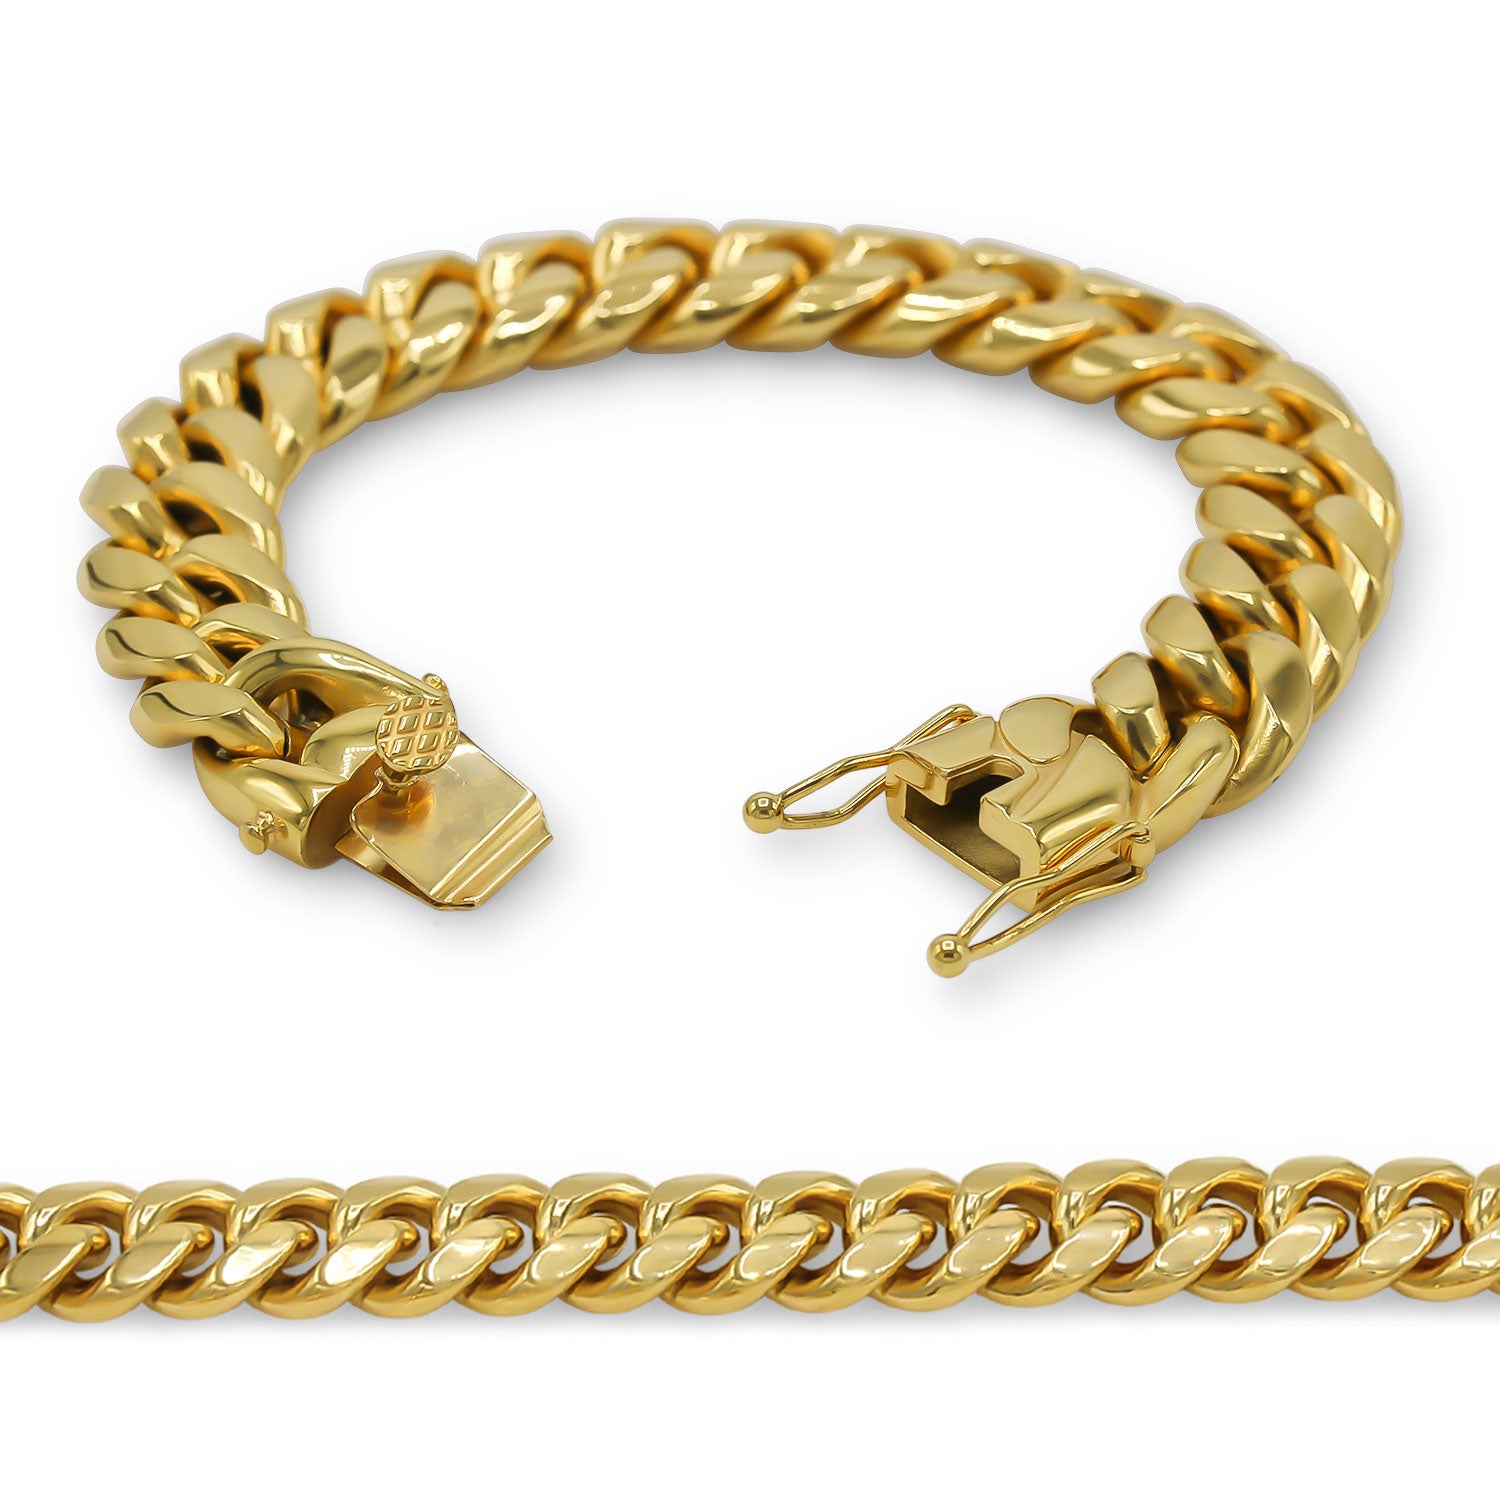 Luxury Men's Gold Covered Heavy Stainless Steel Link Chain Bracelet 22cm